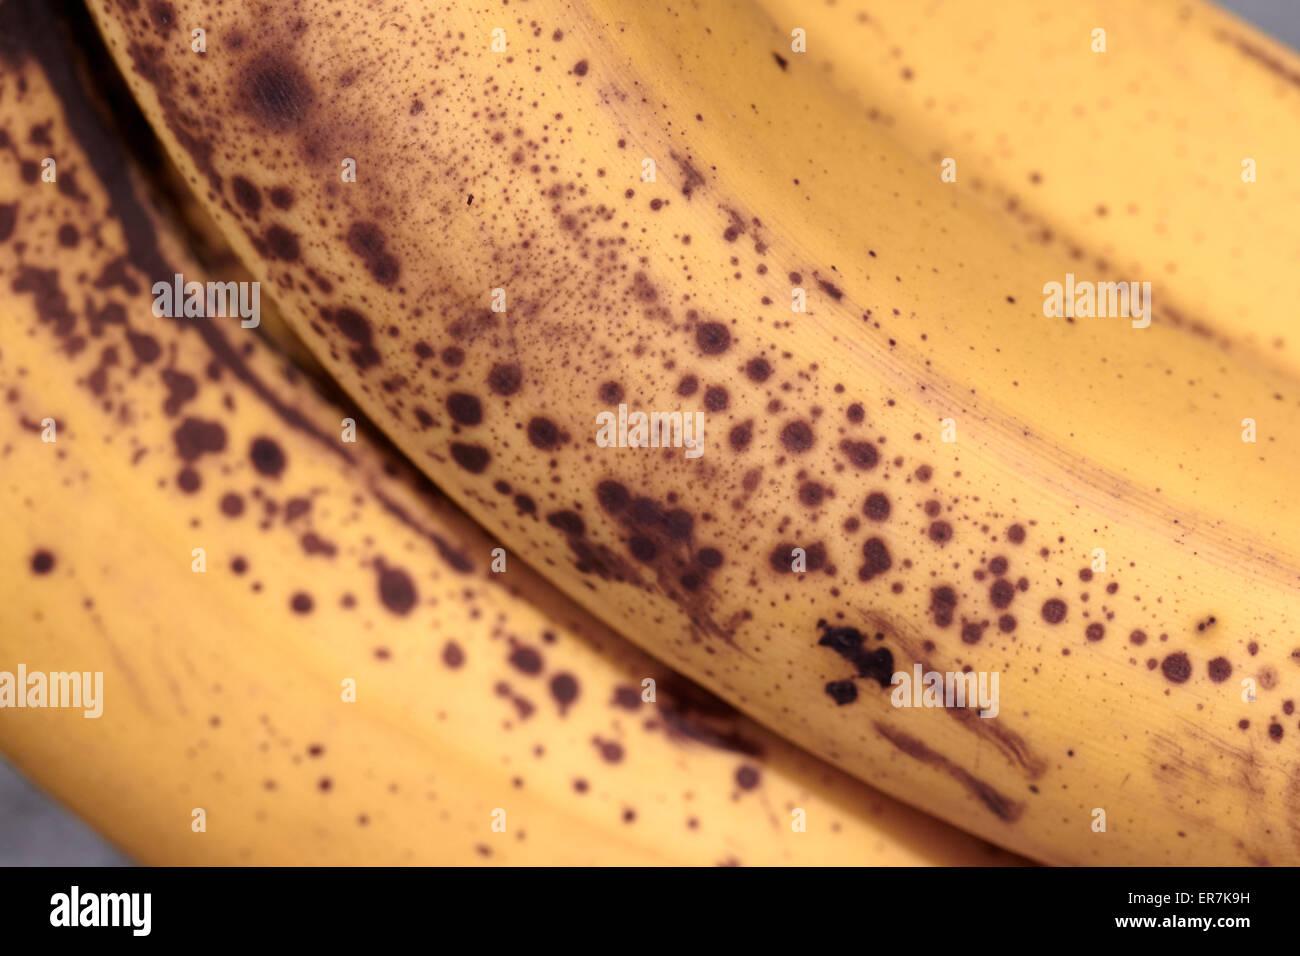 Macchie marroni sulle banane stramature Foto Stock